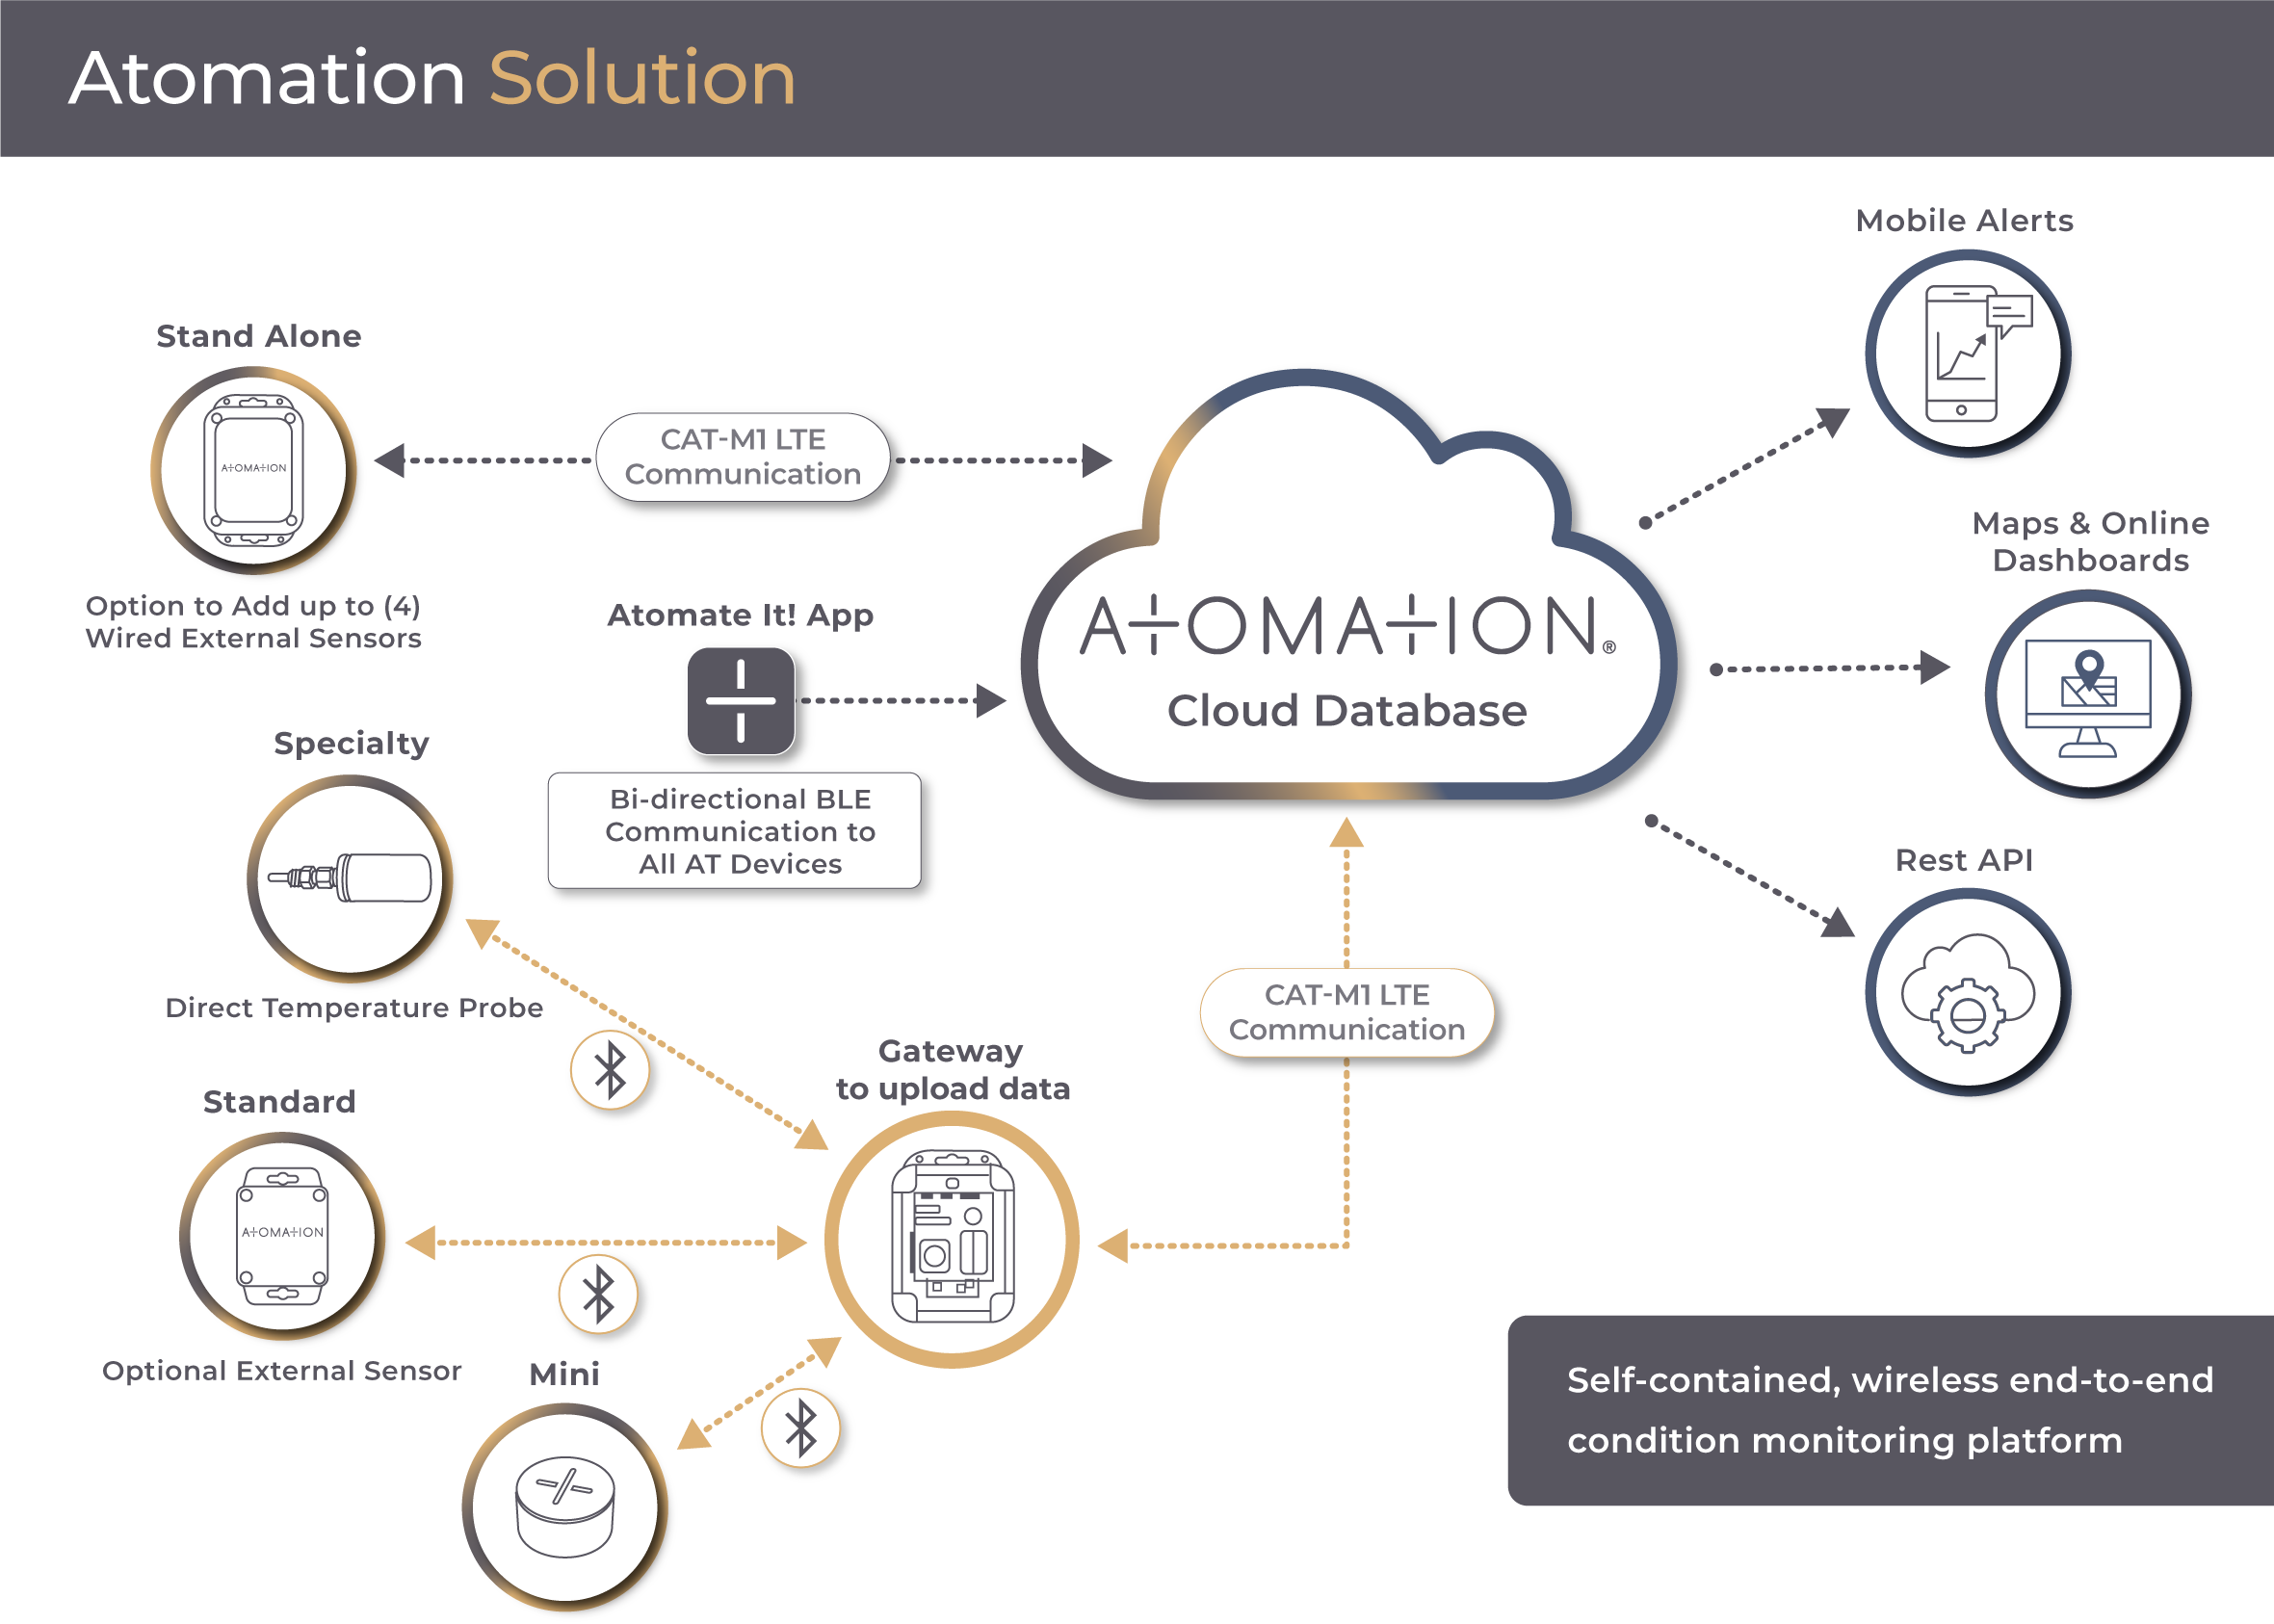 Atomation Solution Diagram